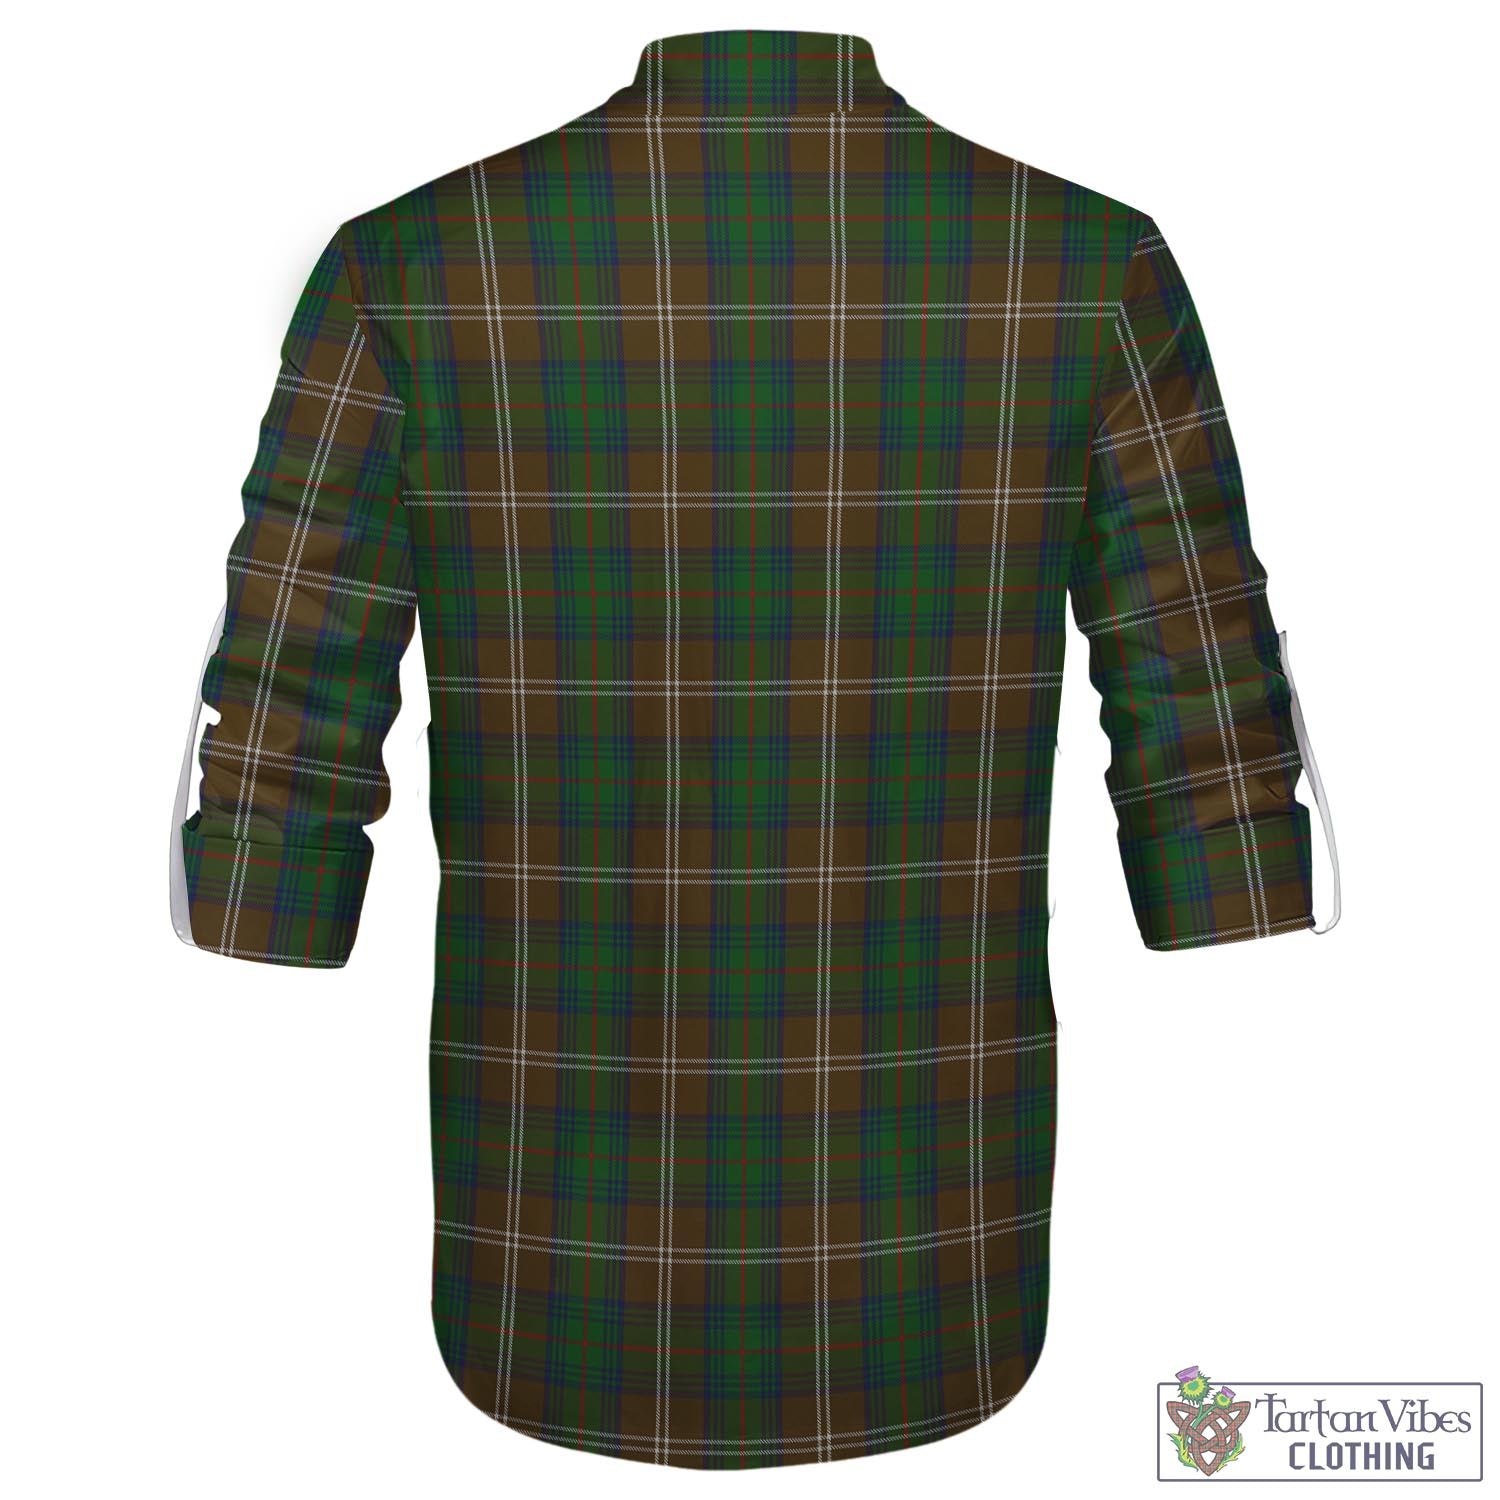 Tartan Vibes Clothing Chisholm Hunting Tartan Men's Scottish Traditional Jacobite Ghillie Kilt Shirt with Family Crest